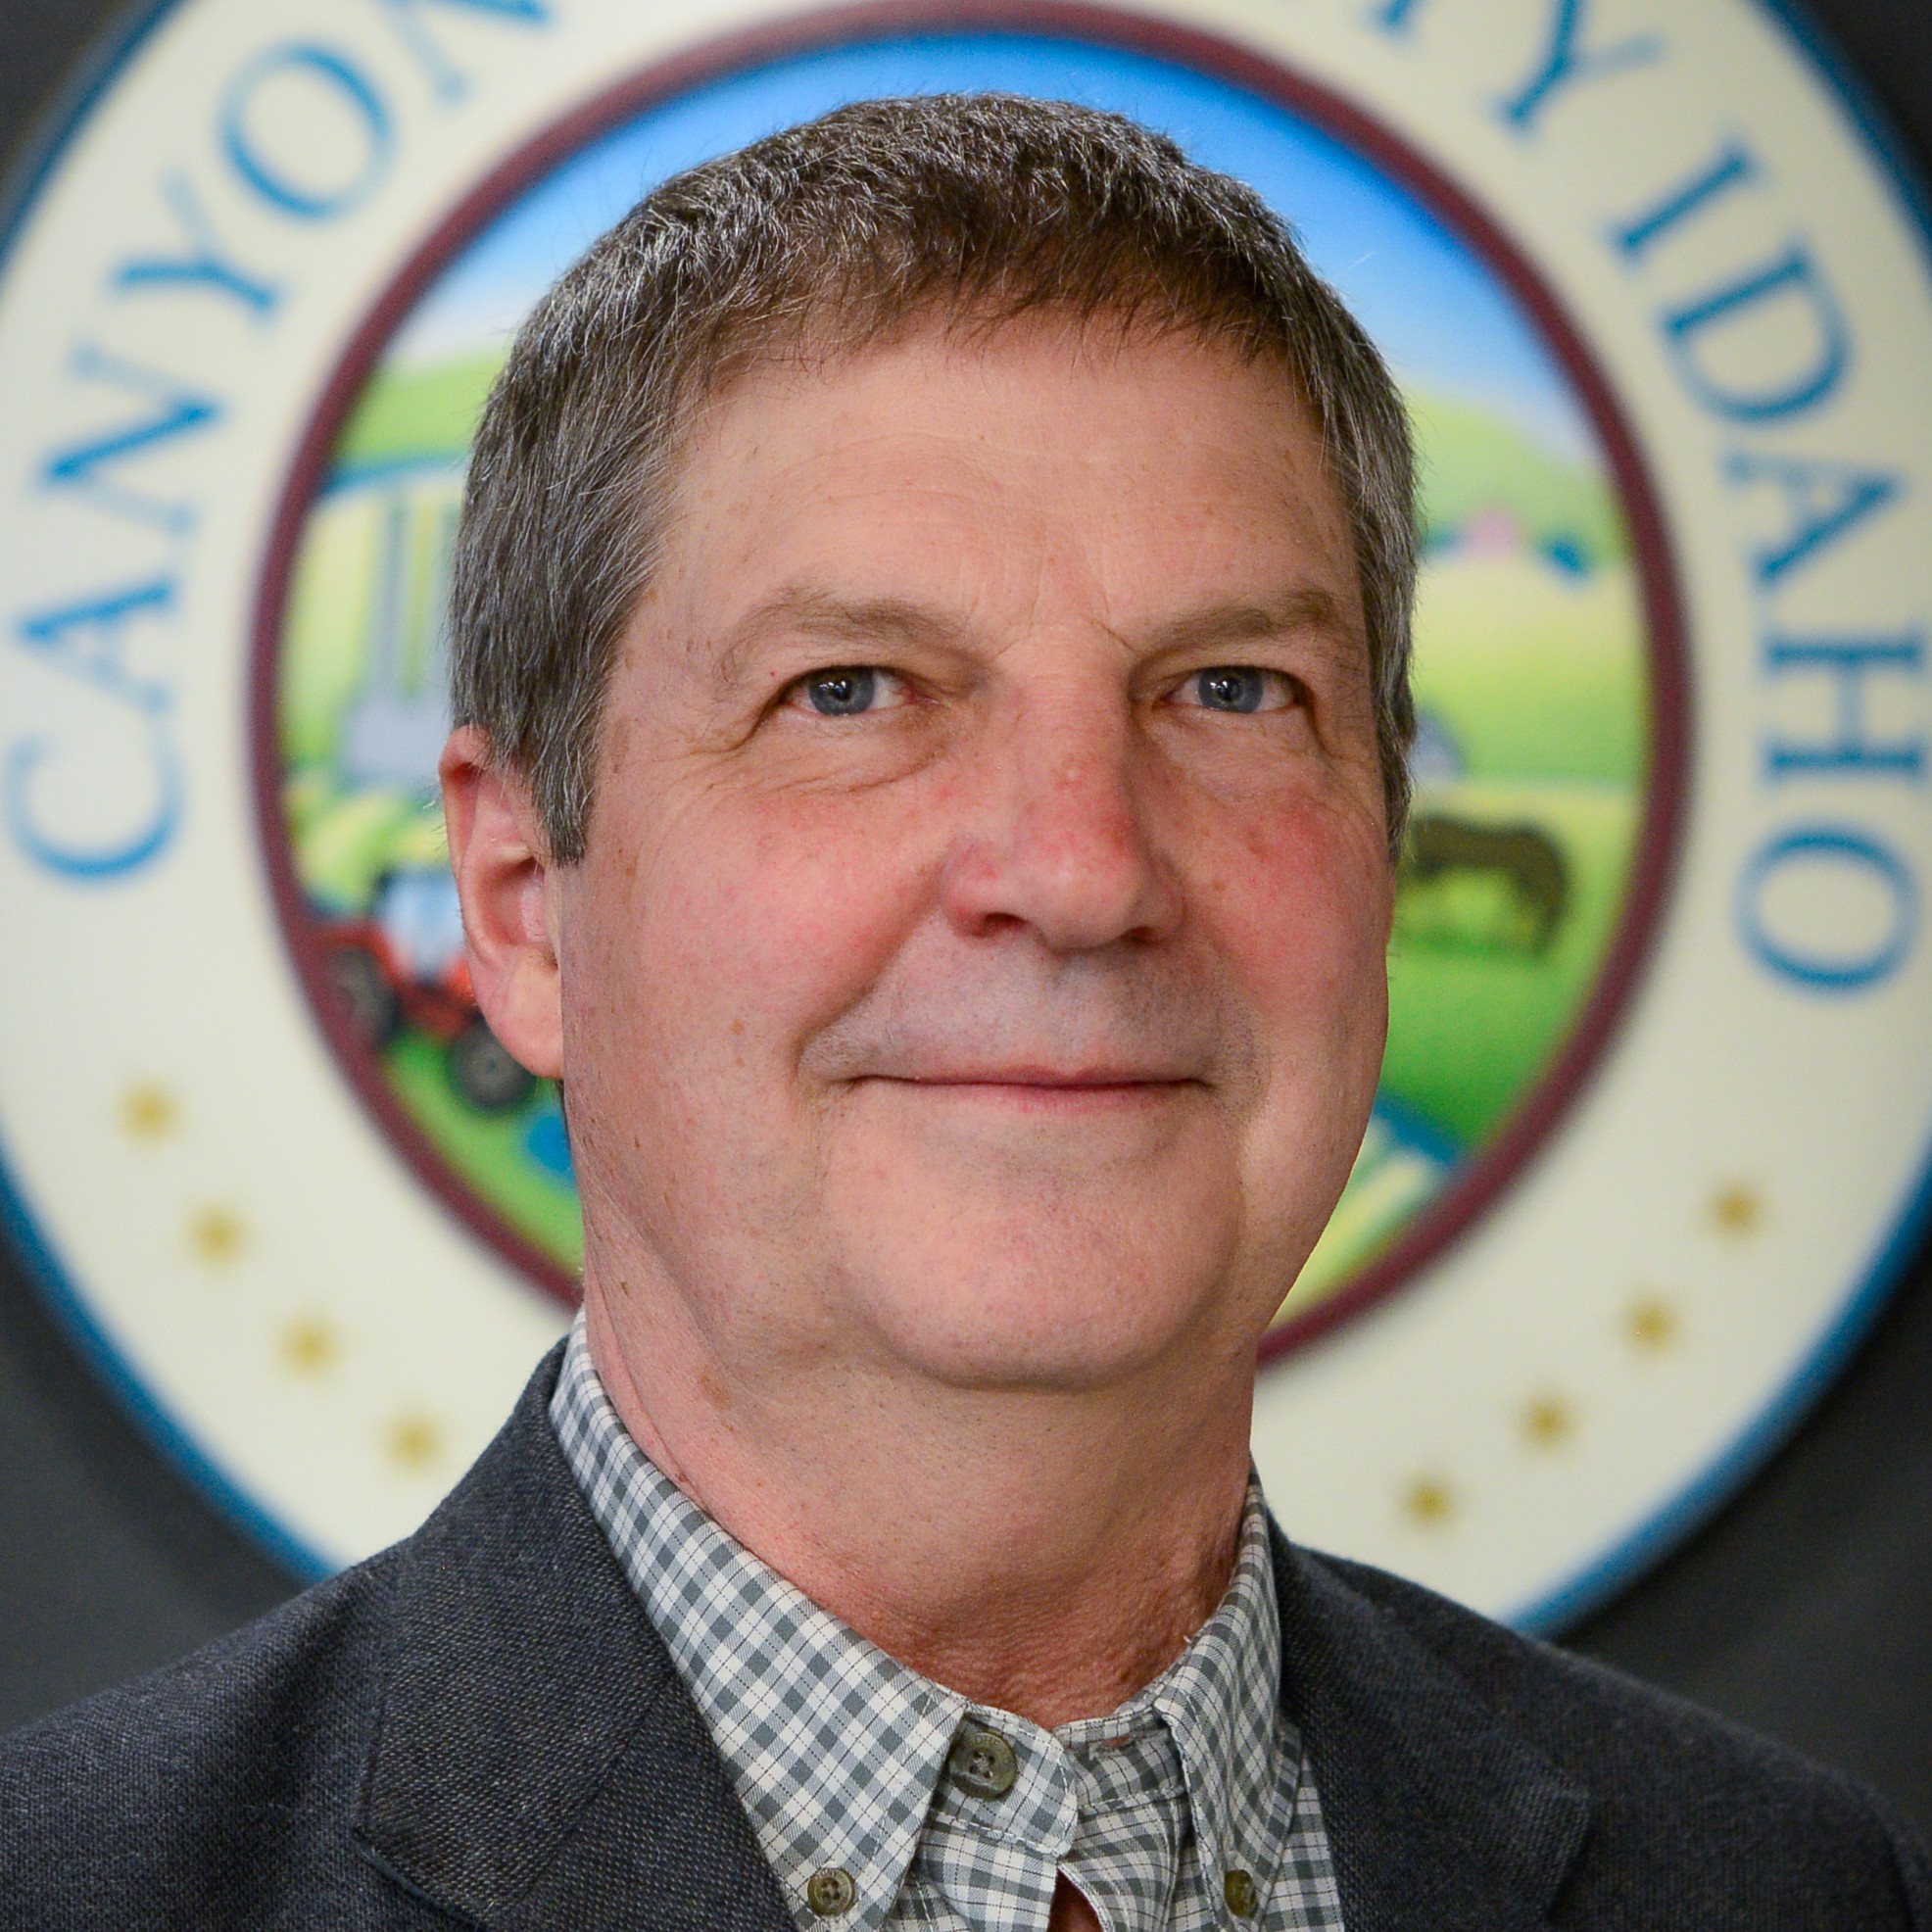 Commissioner Brad Holton